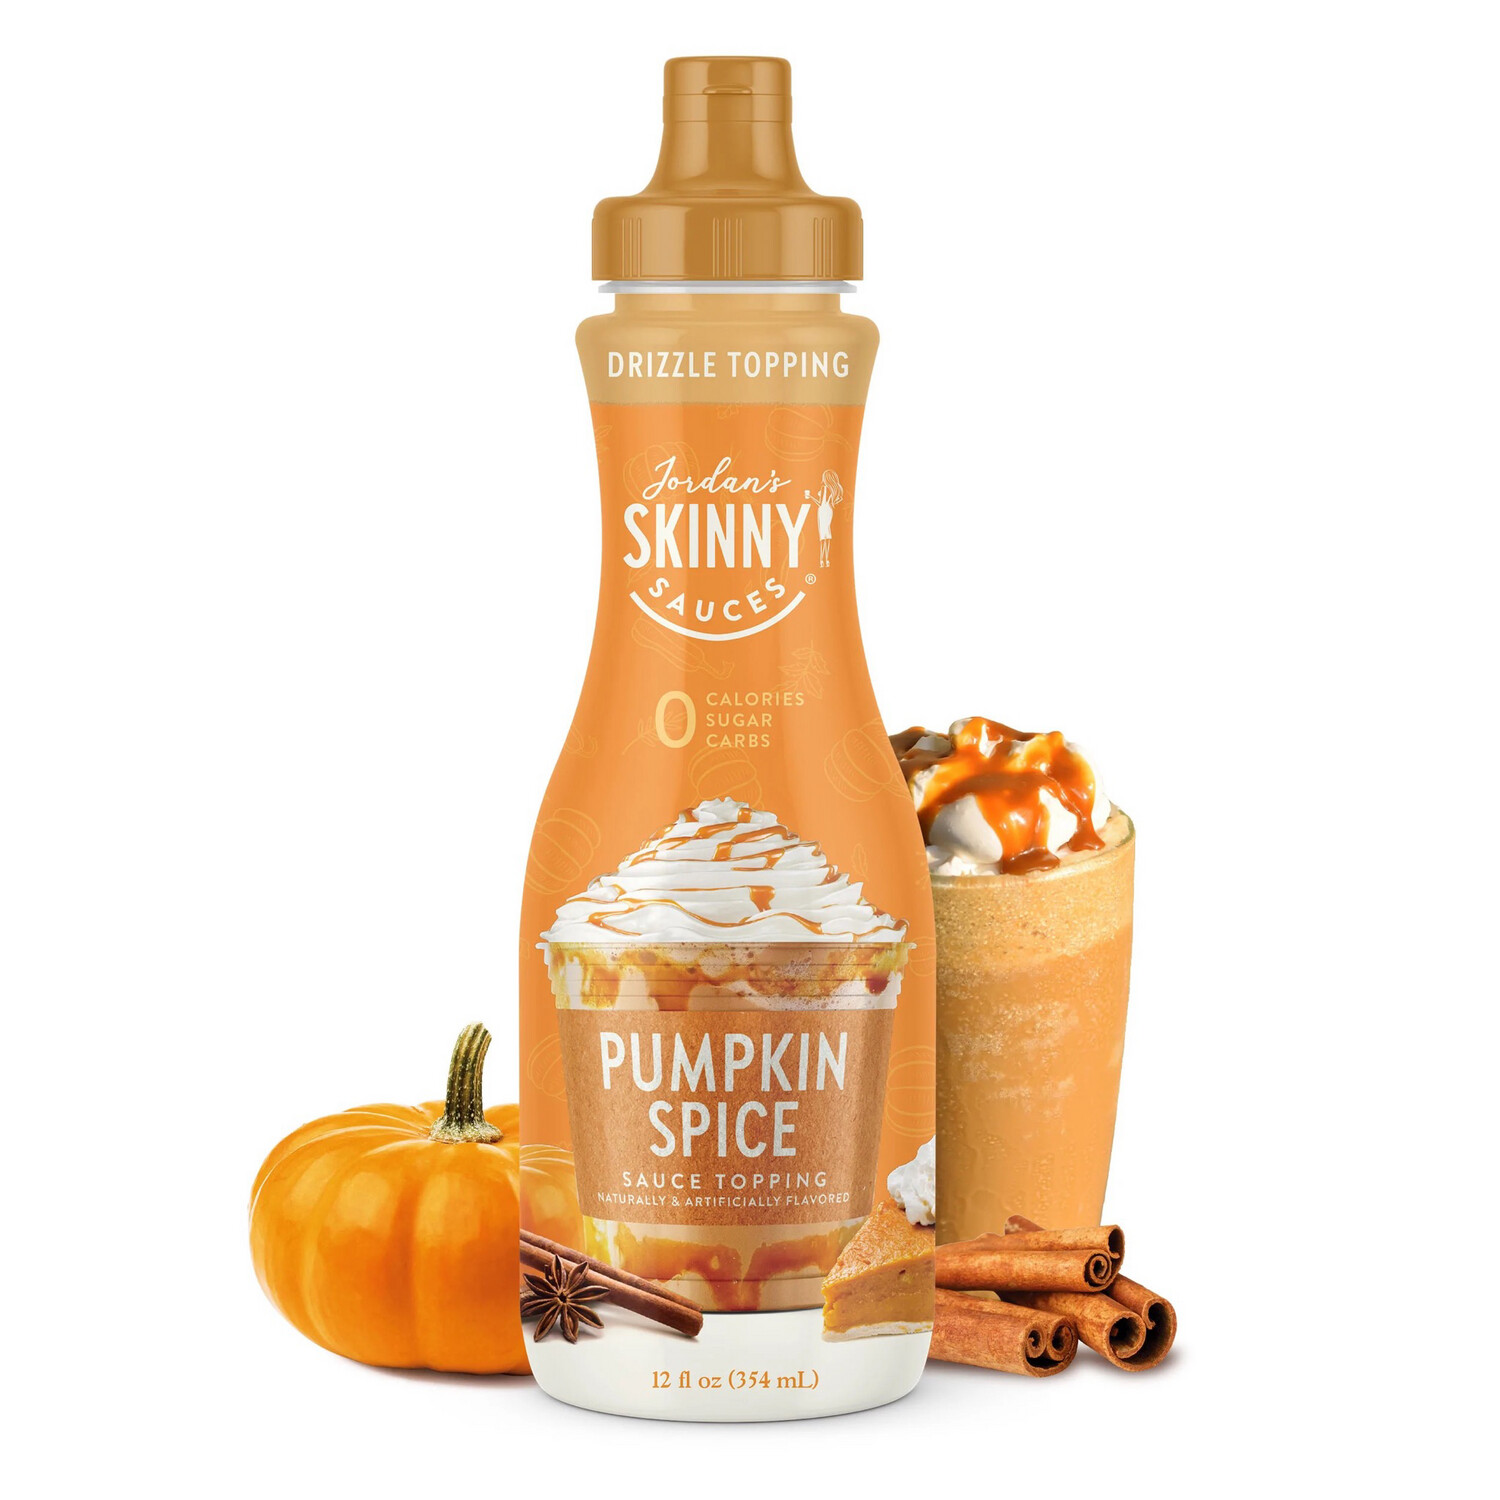 Jordan's Skinny Sauces Pumpkin Spice Topping 